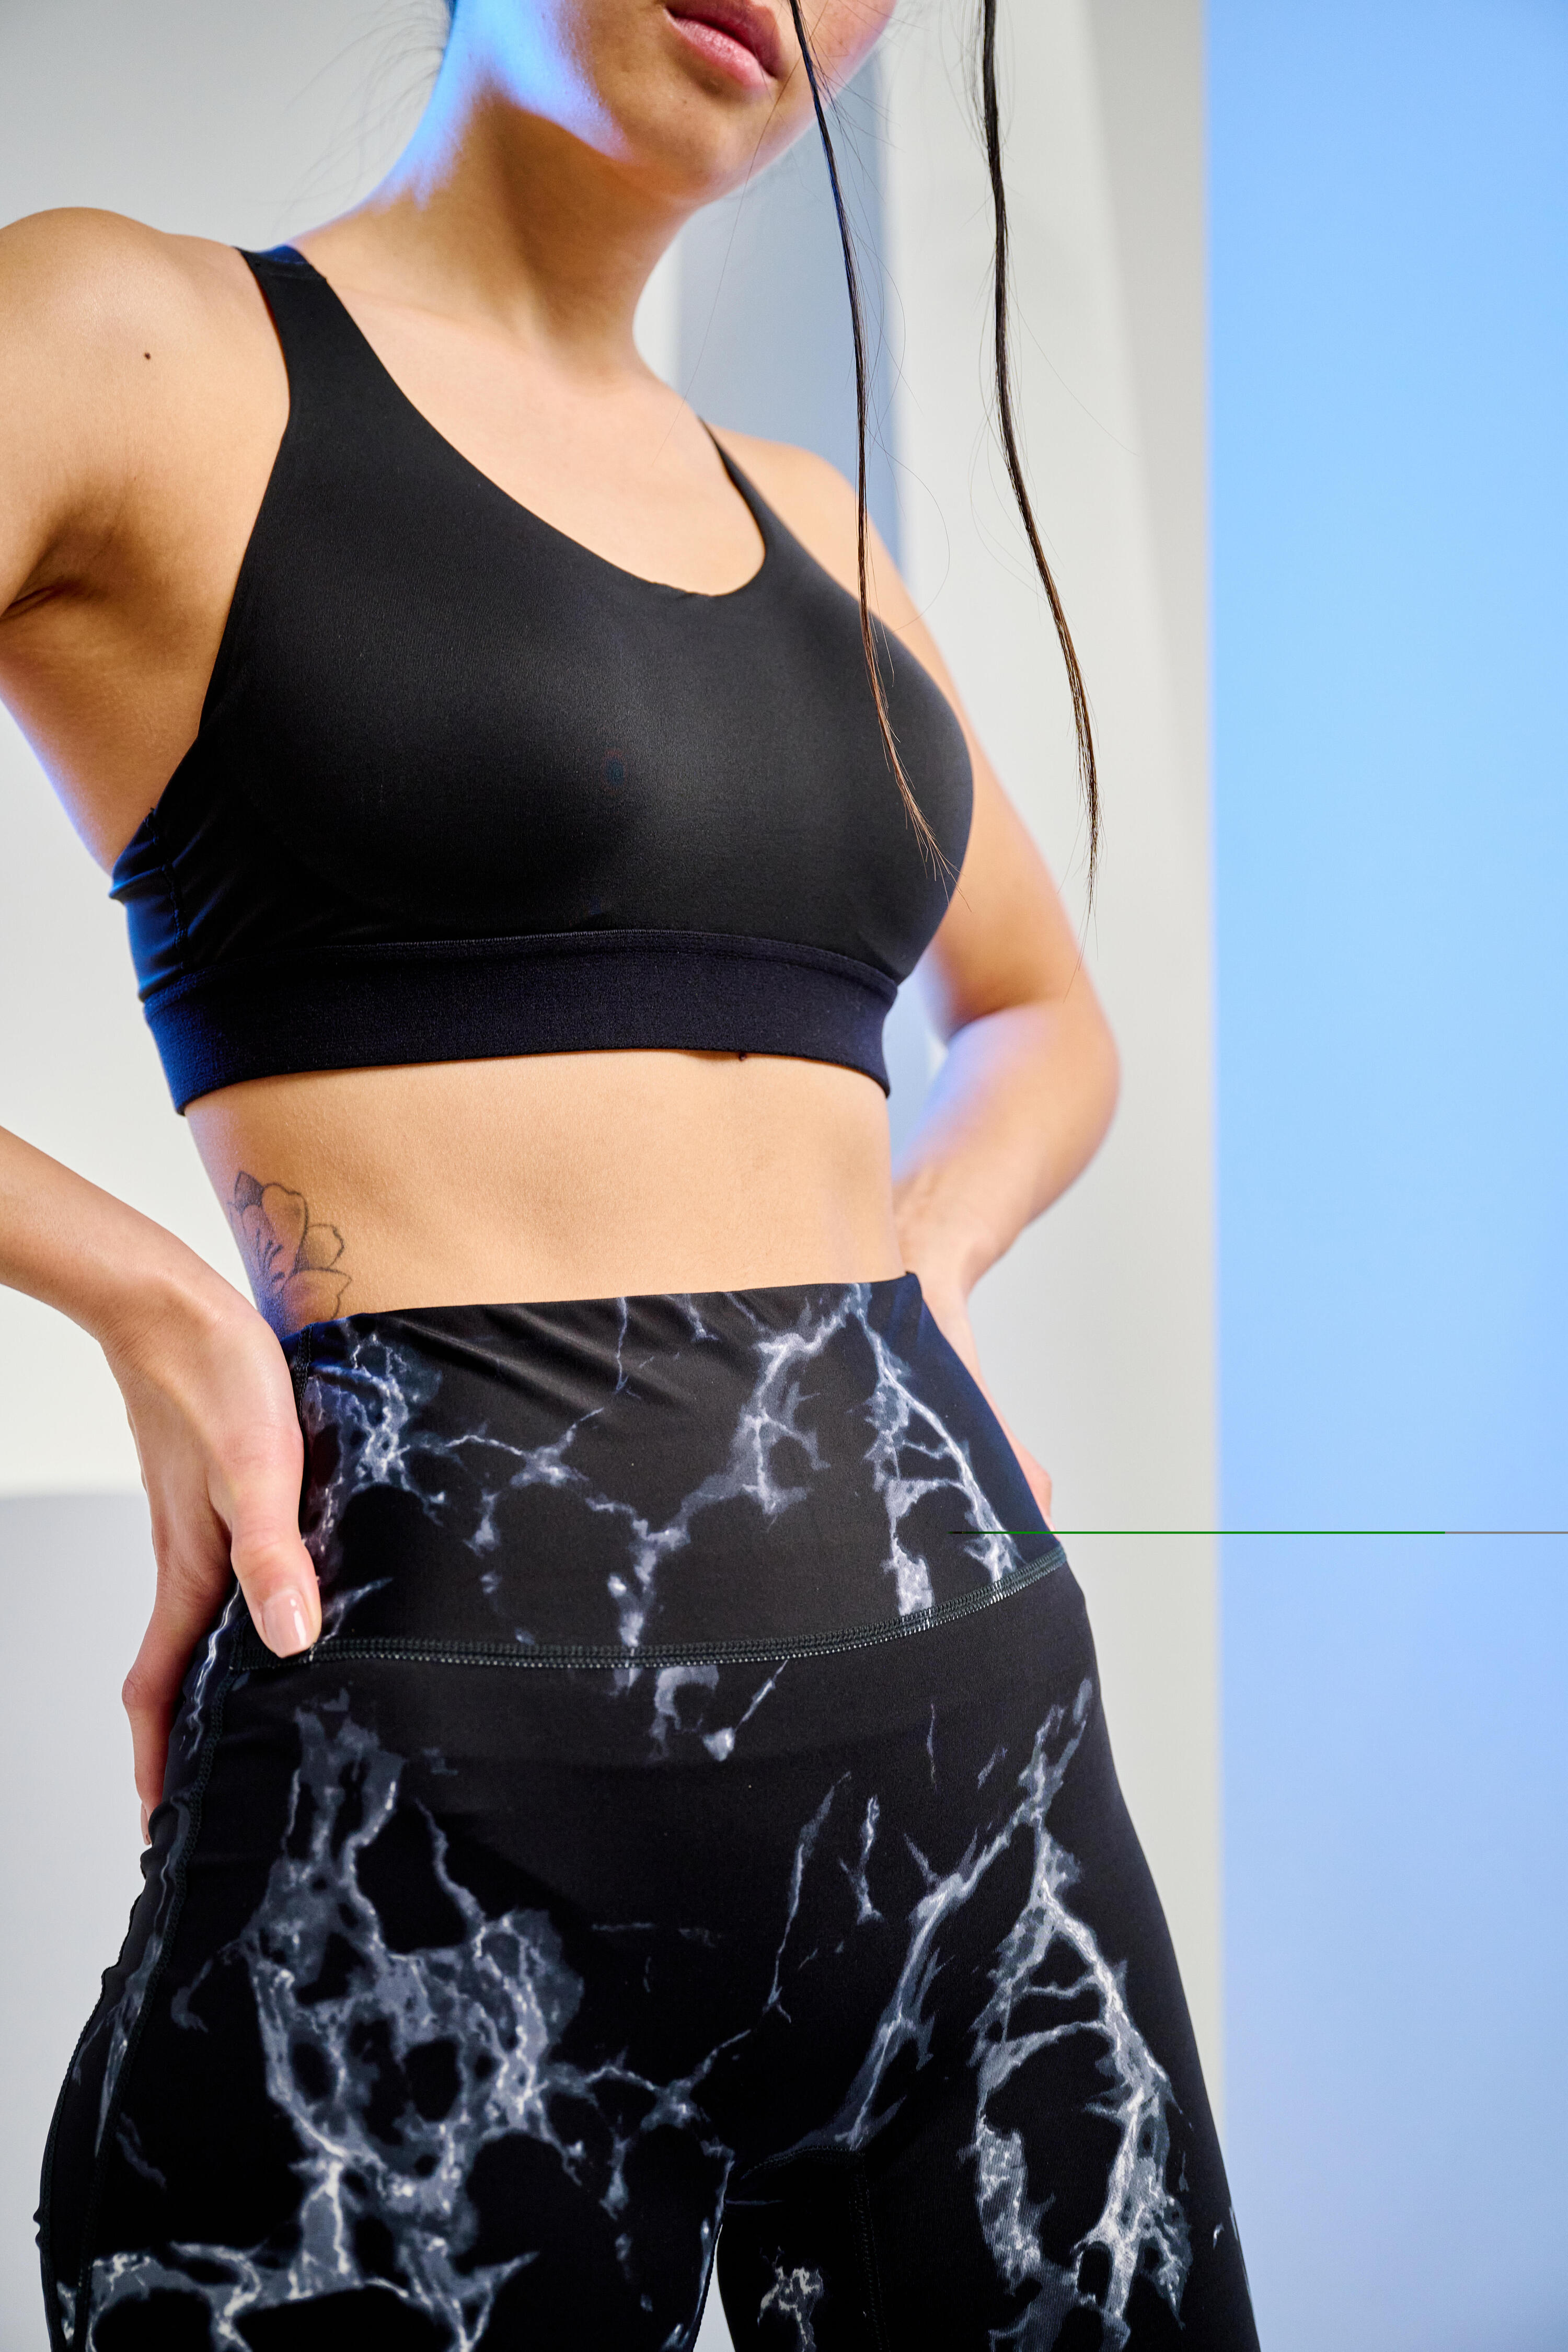 Women's shaping fitness cardio high-waisted leggings